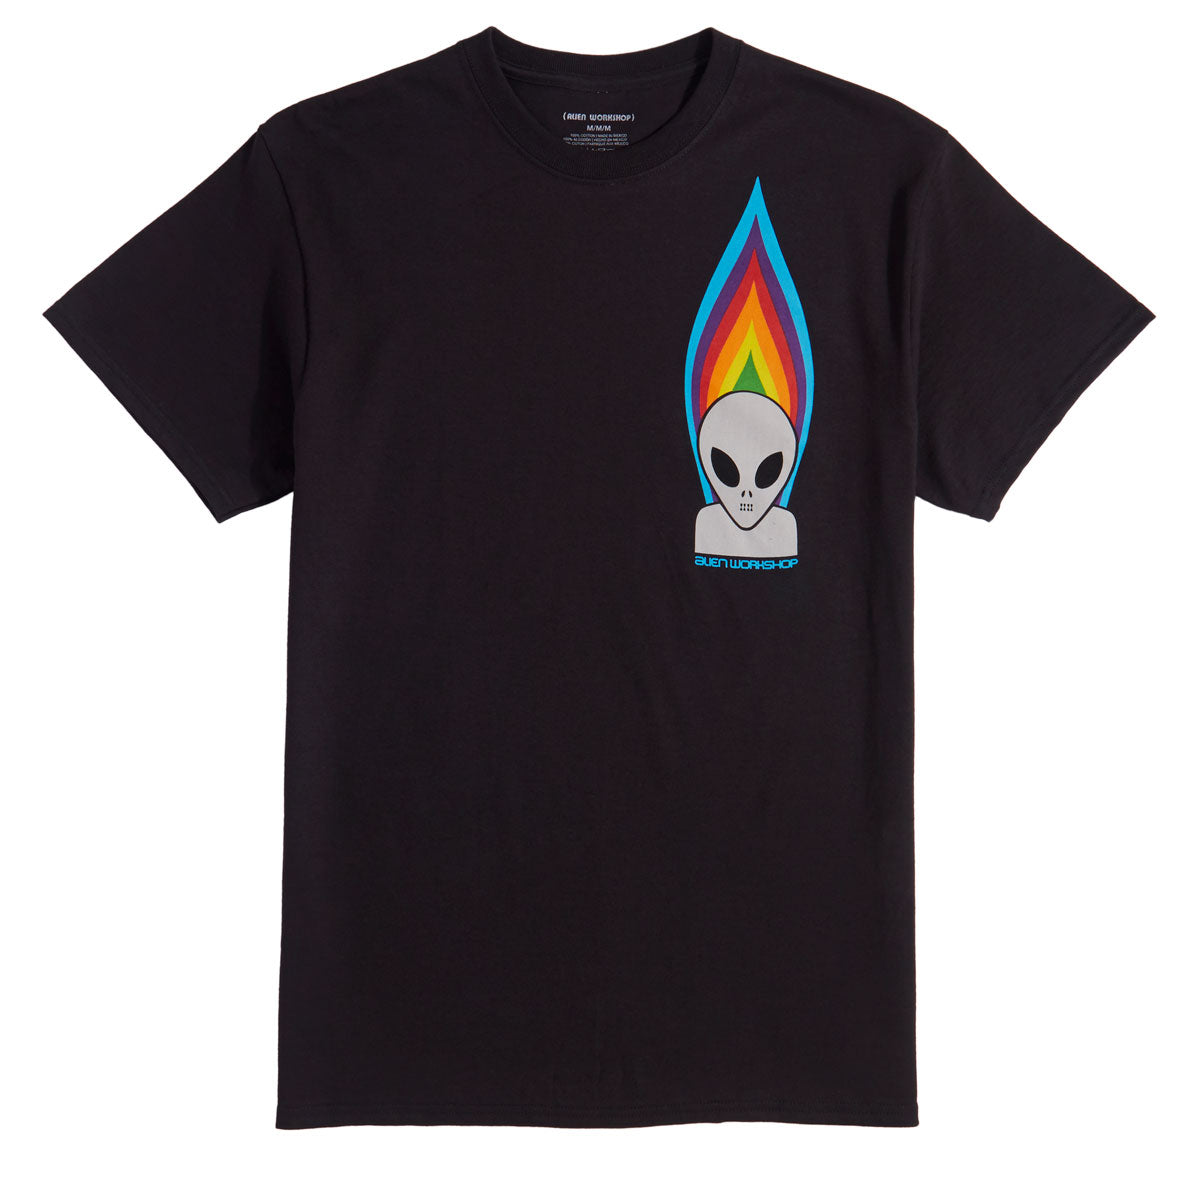 Alien Workshop Torch T-Shirt - Black image 1